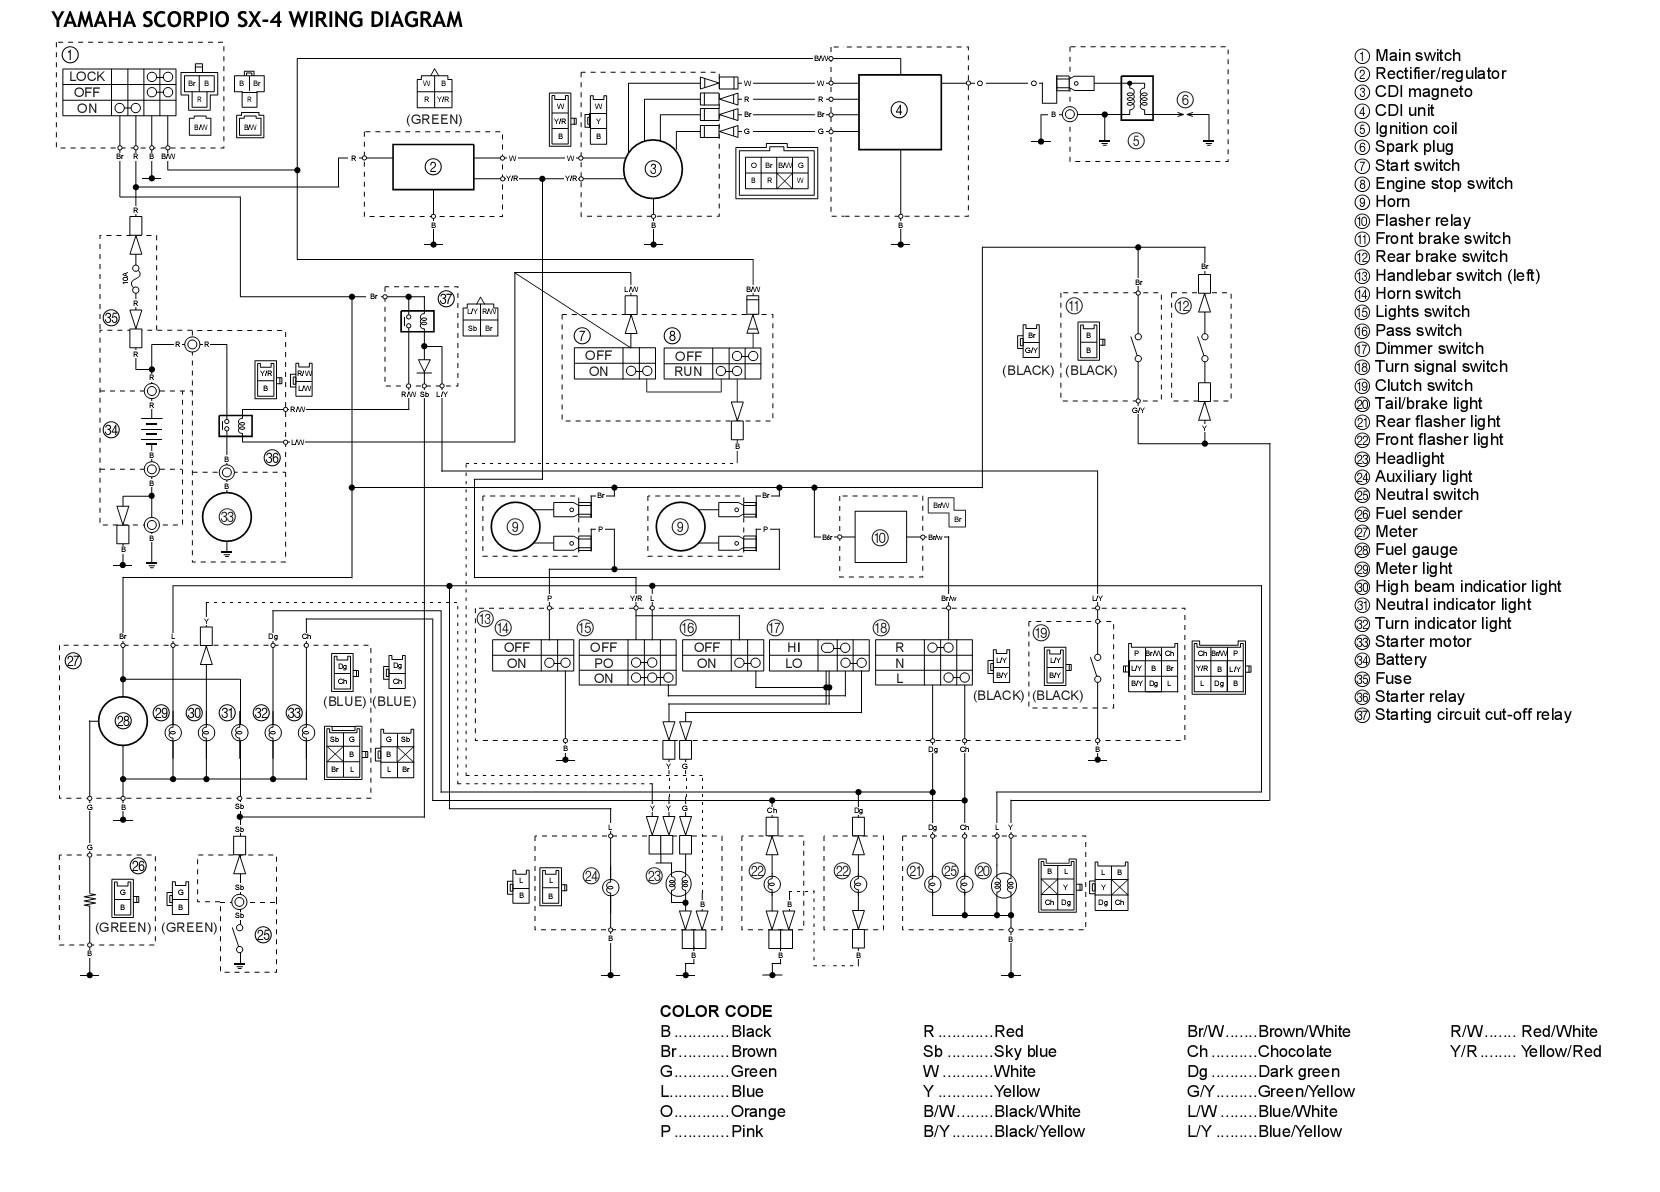 Car Starter Parts Diagram Yamaha G2 Starter Wiring Wiring Diagram Of Car Starter Parts Diagram